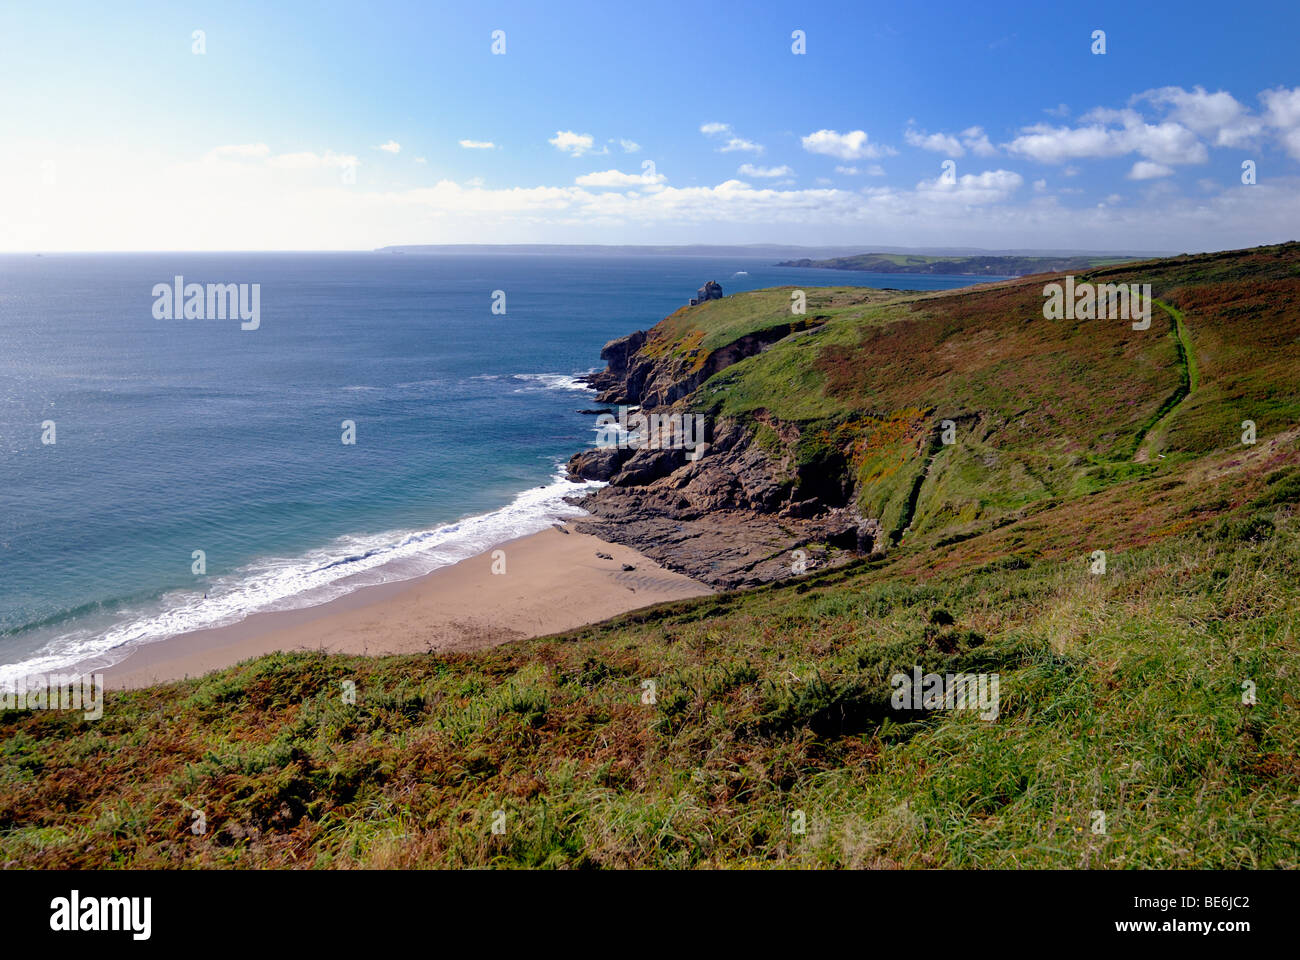 A secluded sandy beach on the Cornish coastline Stock Photo